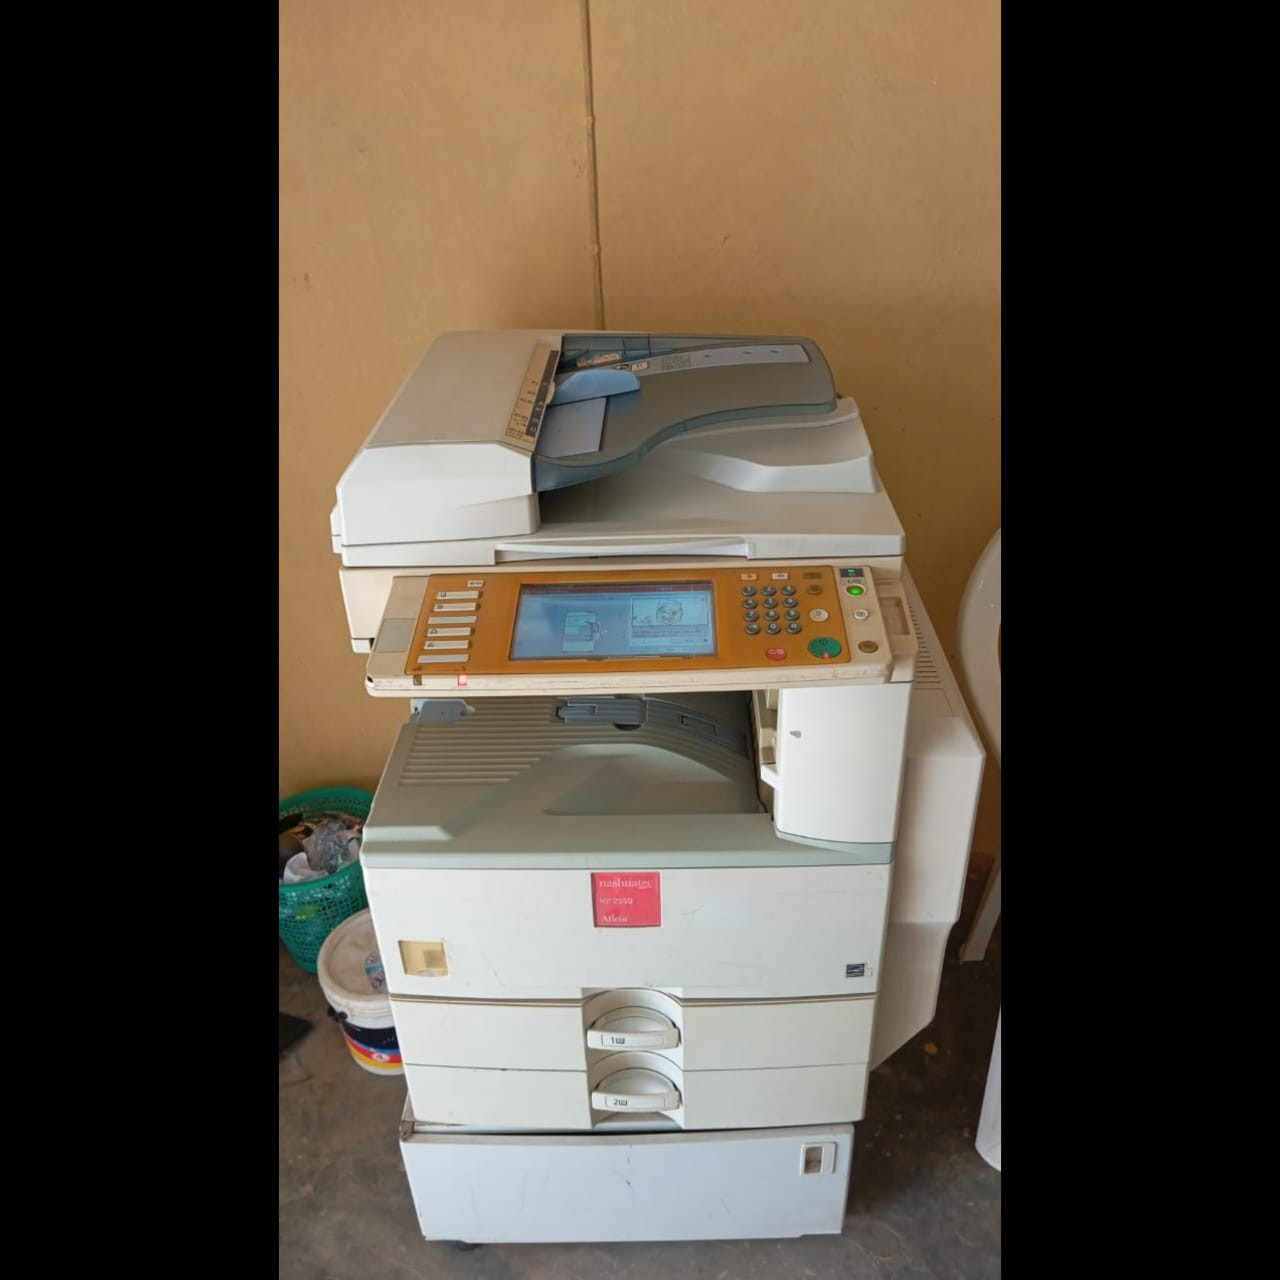 [K1]-Rico MP 2550 A3 mono laser multifunction printer #For_Sale